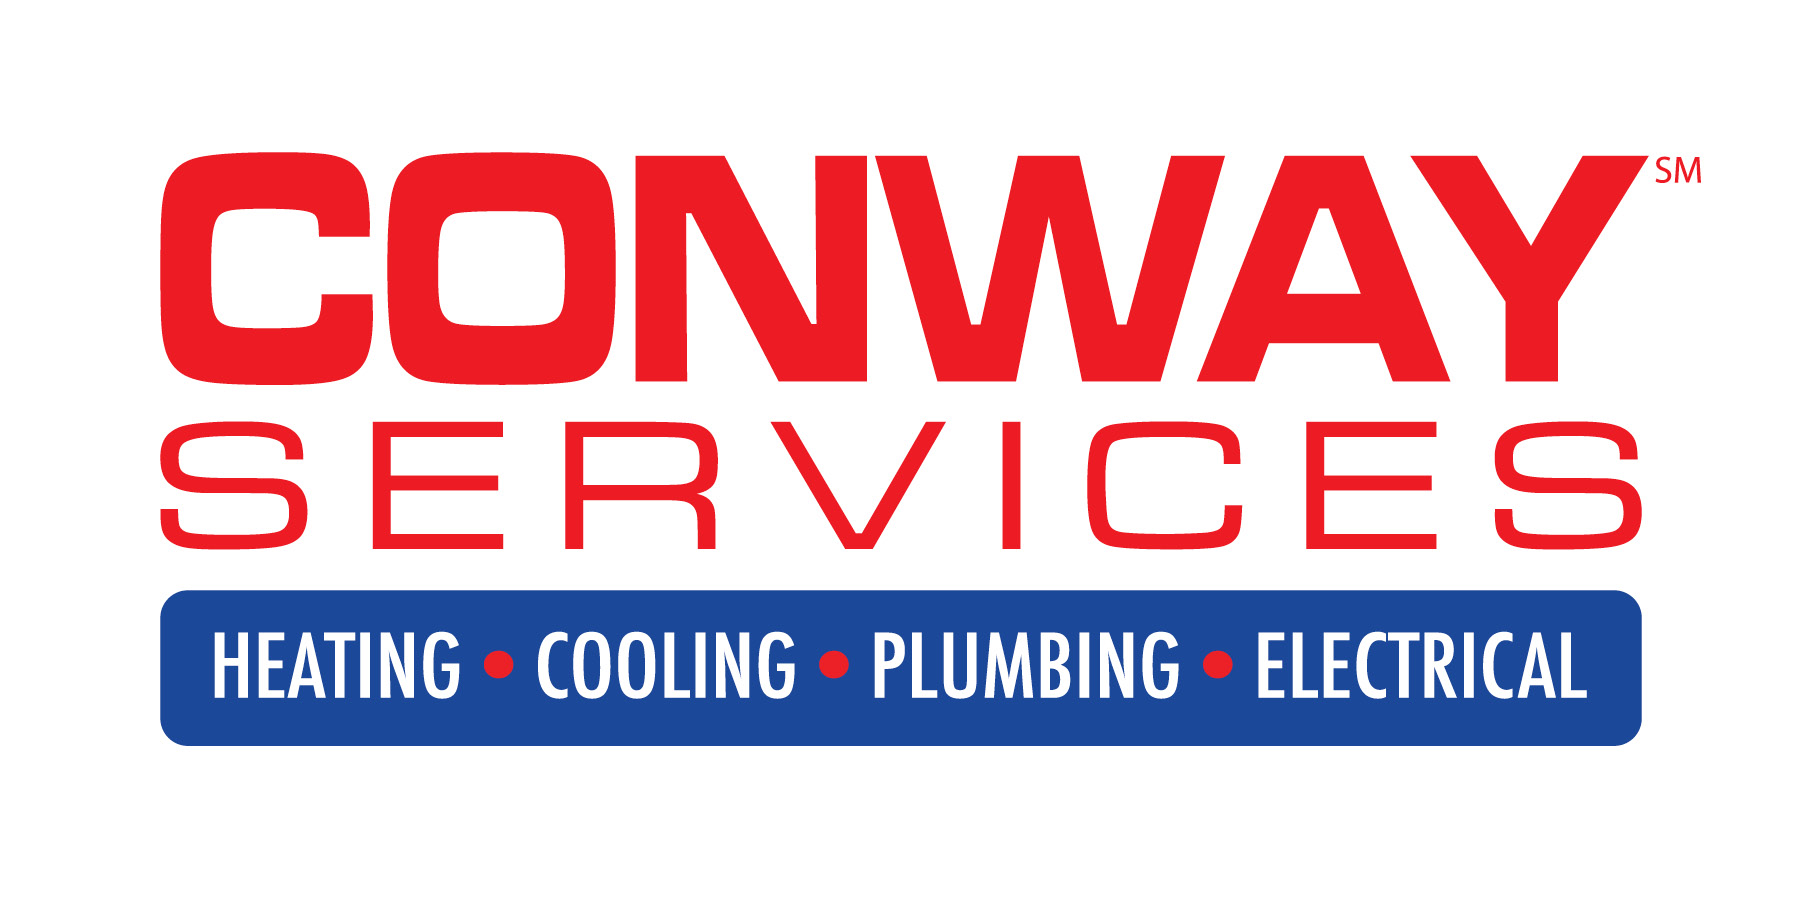 Conway Services branch logo.